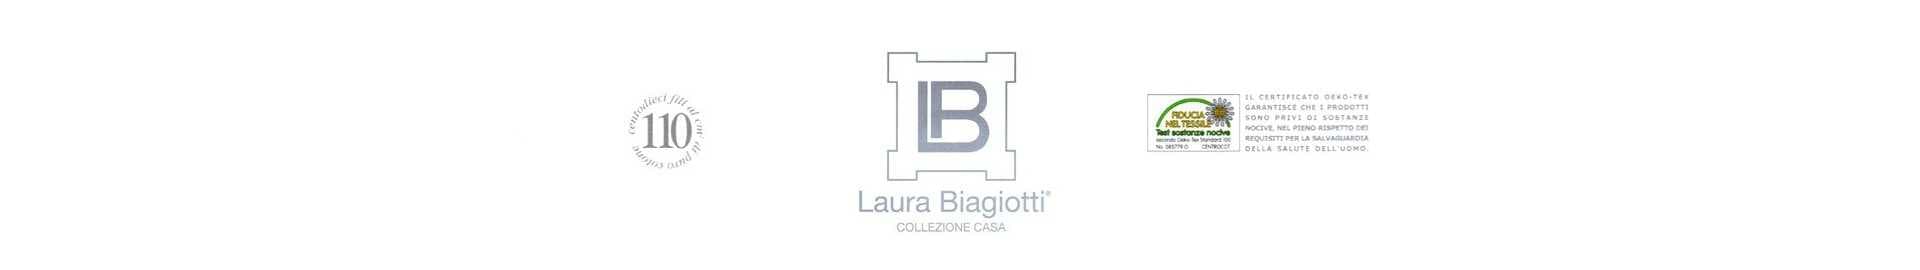 Laura Biagiotti Rasoline L.F.D. Home